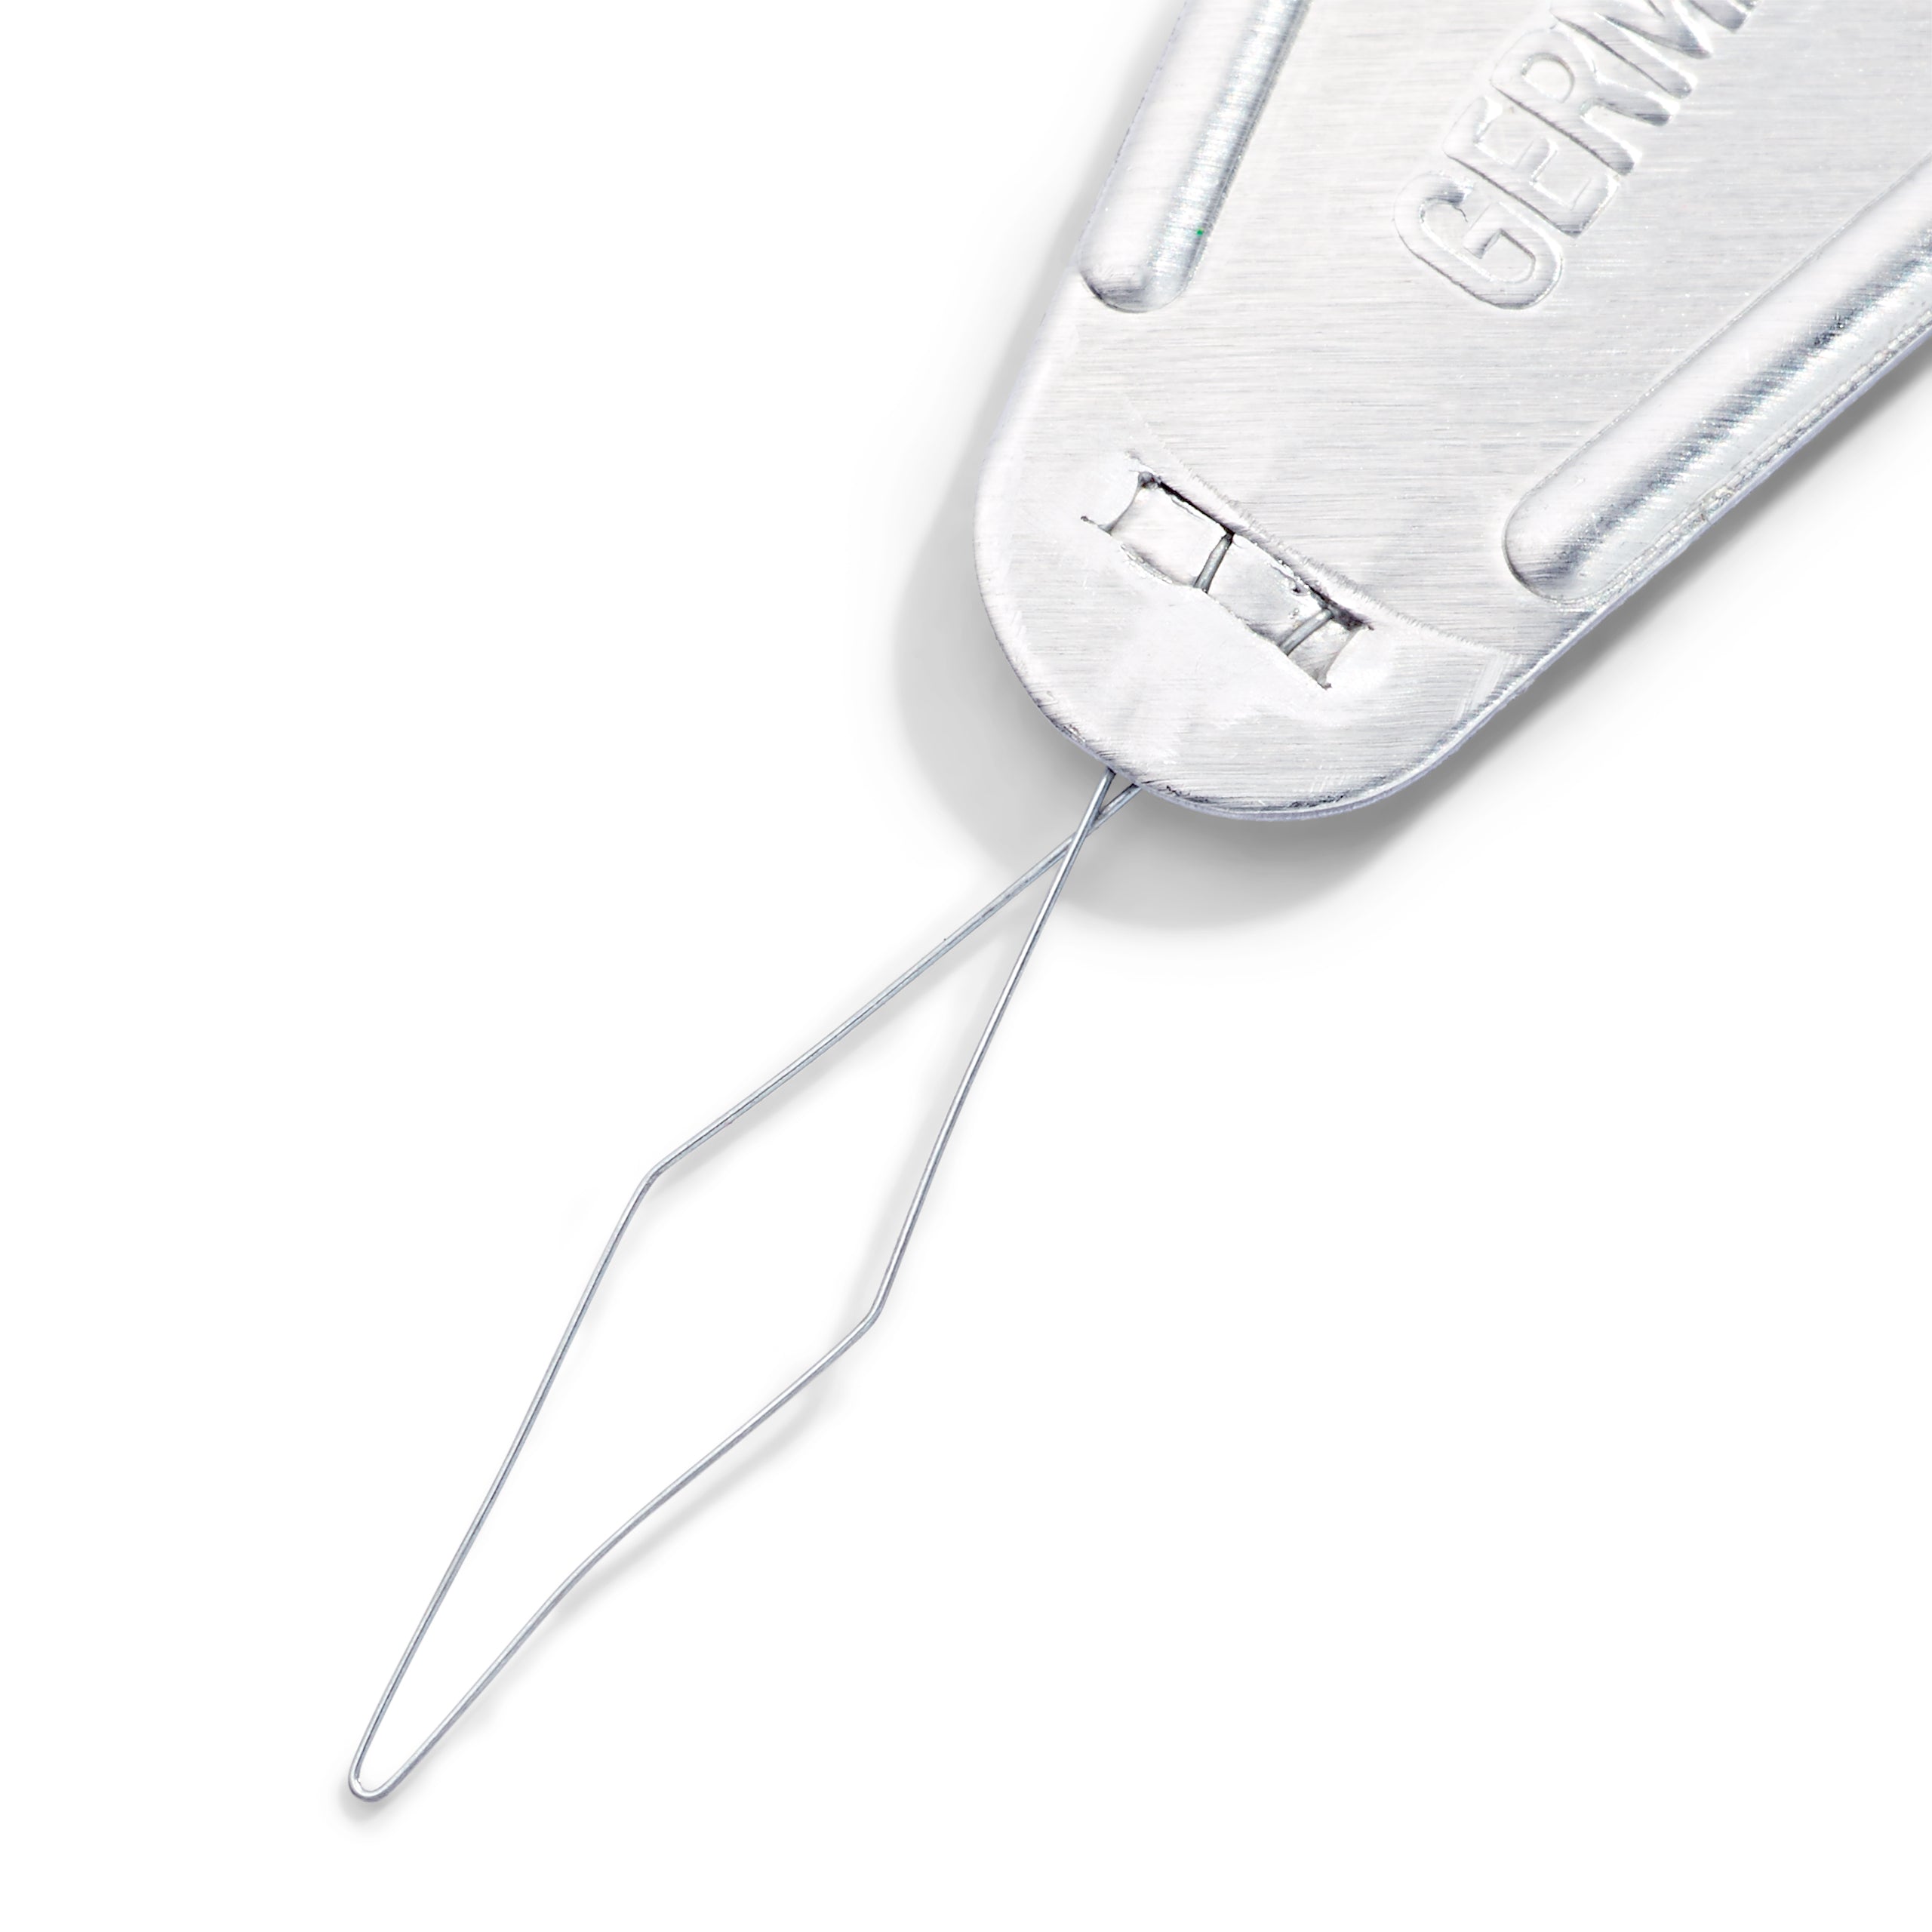 prym needle threader silver – Needles & Wool